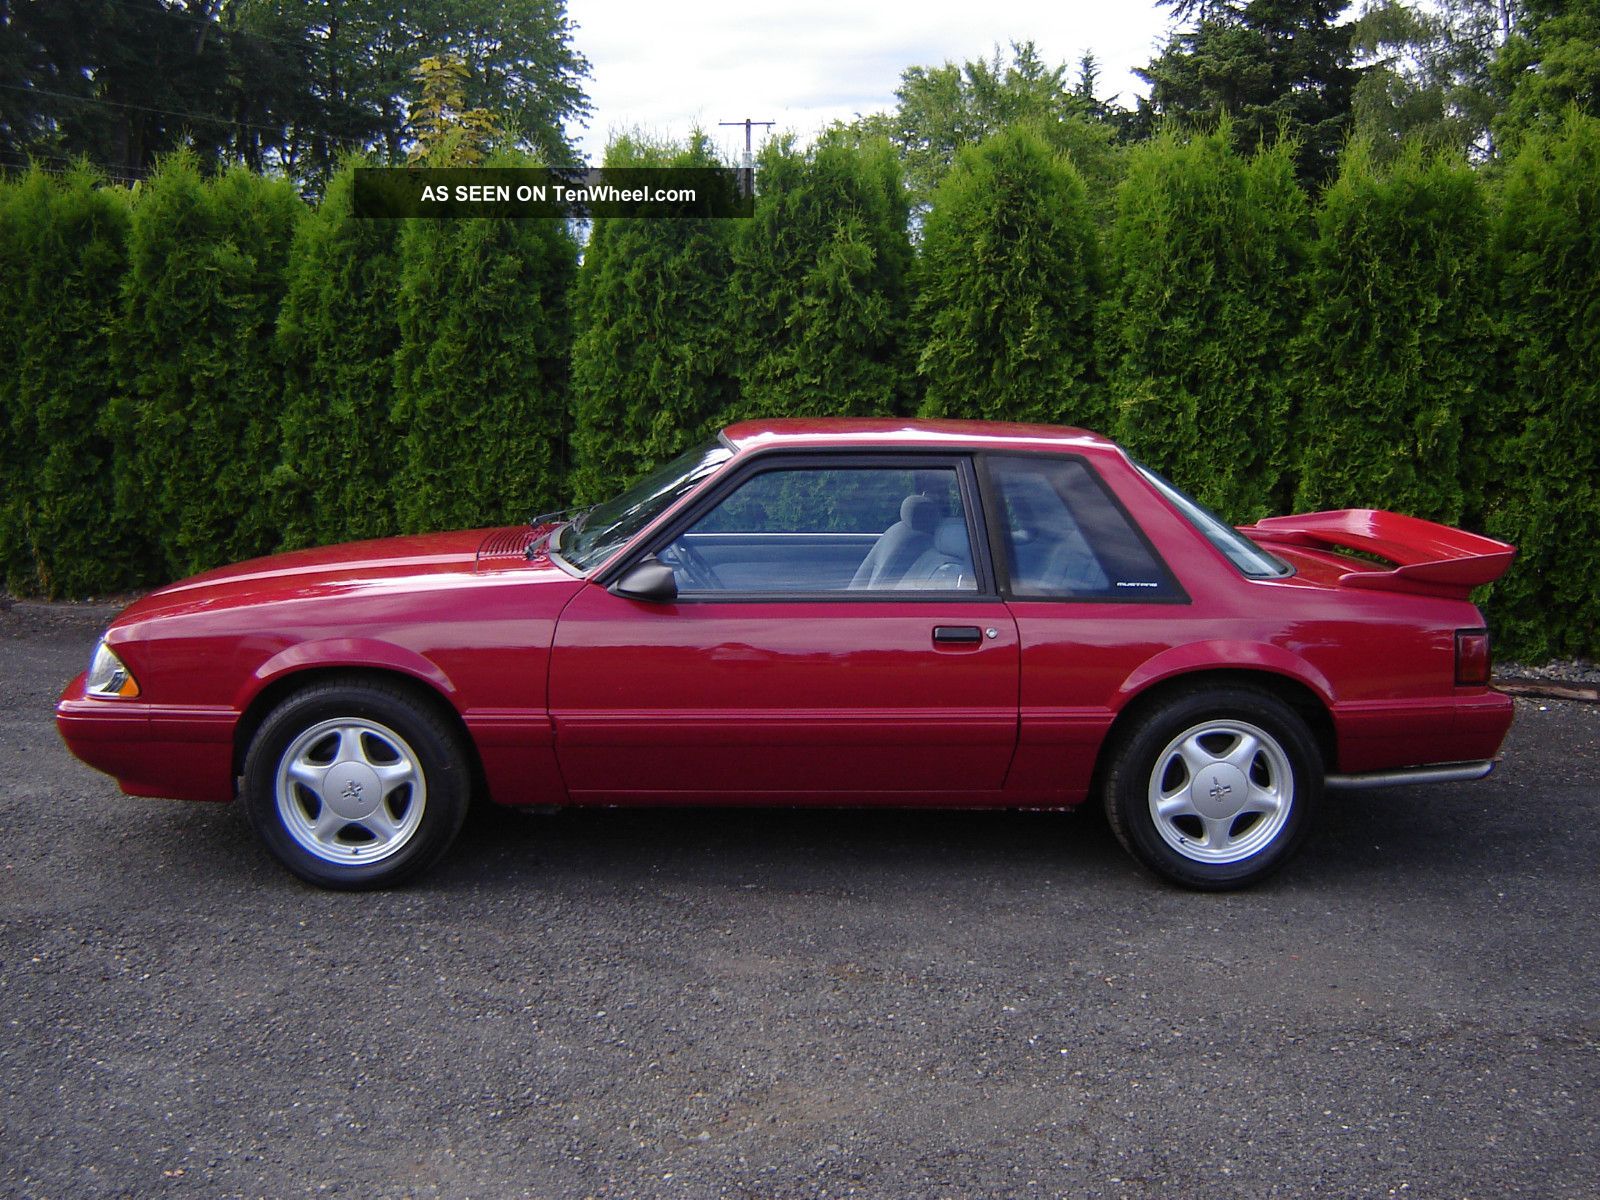 1989 Mustang Lx 5.0 Convertible Specs